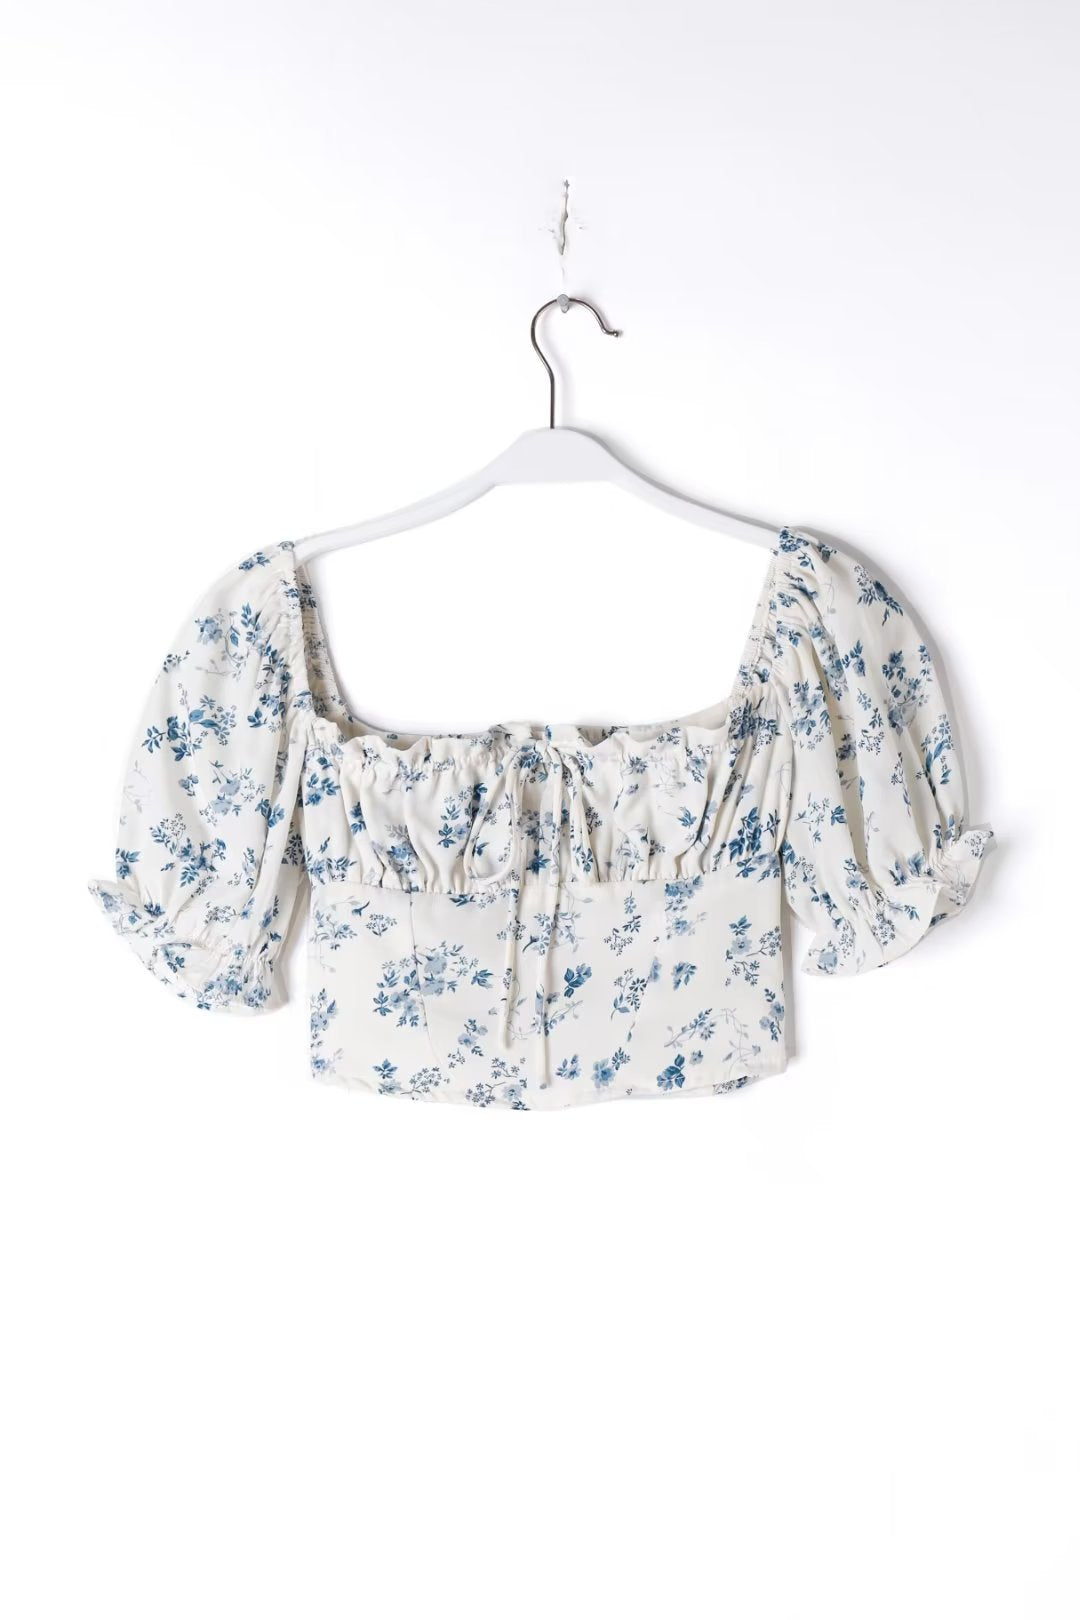 Summer Pullover Square Collar Slimming Curved Hem Short Print Women Shirt Top